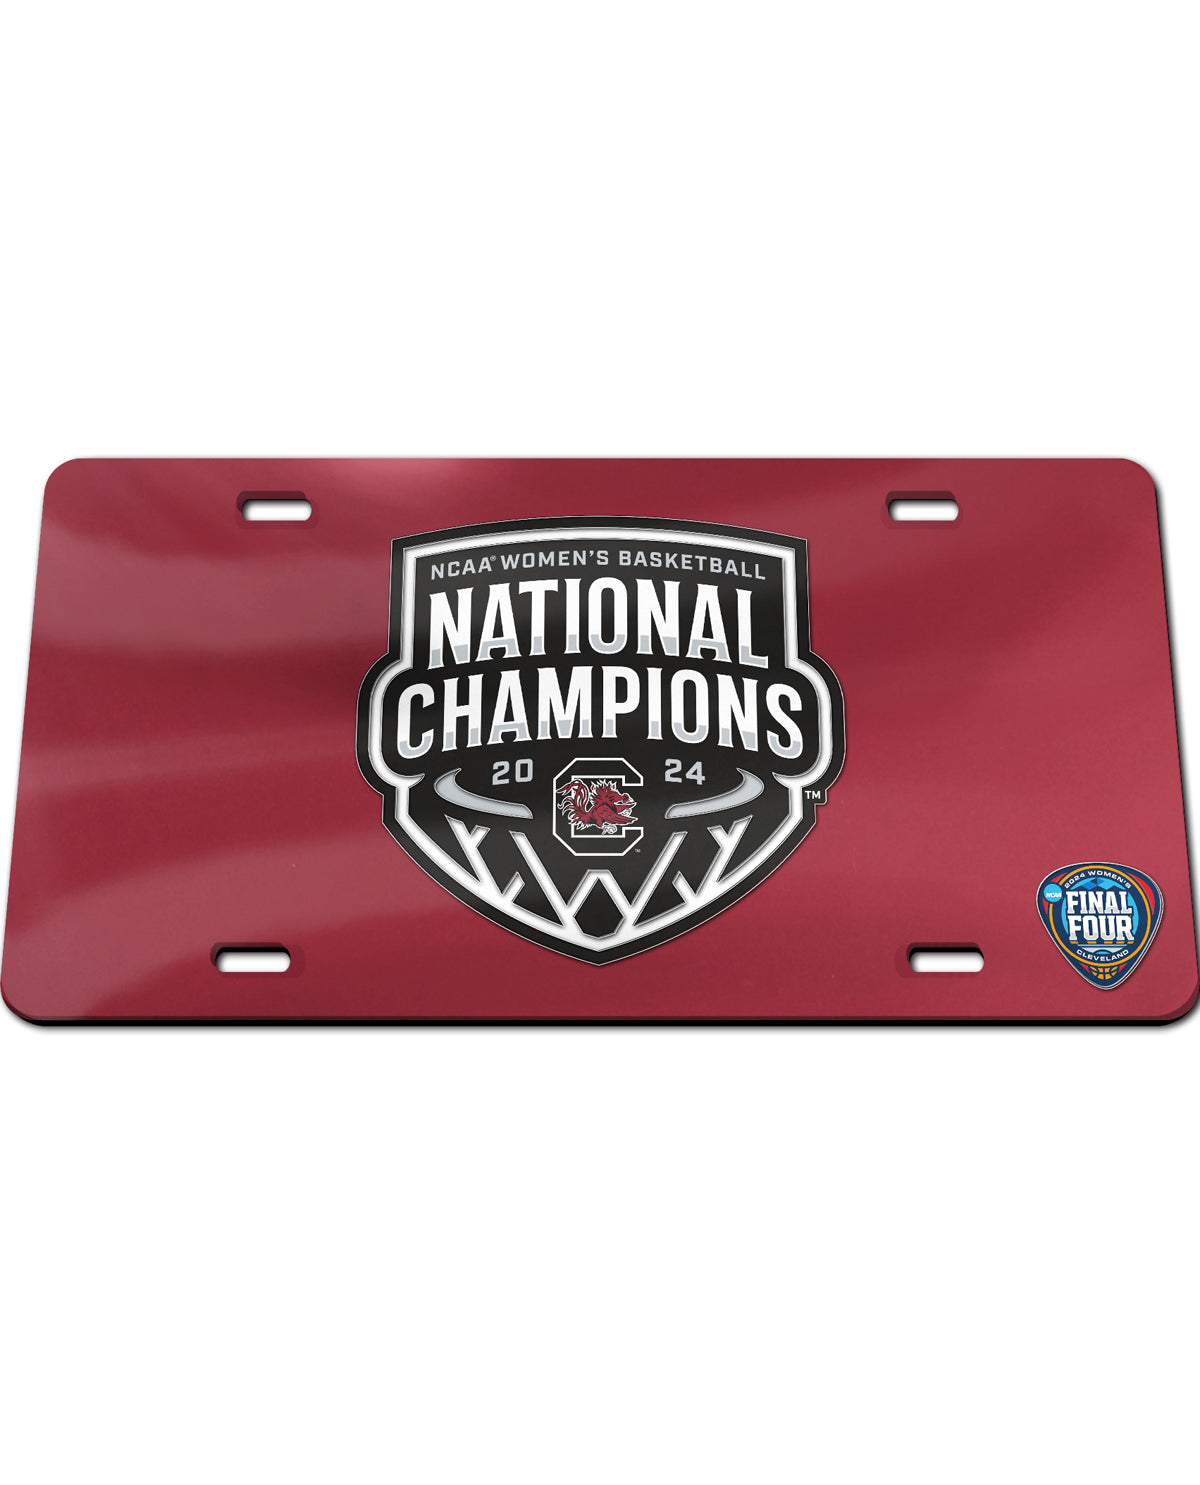 USC Women's Basketball National Championship - 6"x12" License Plate